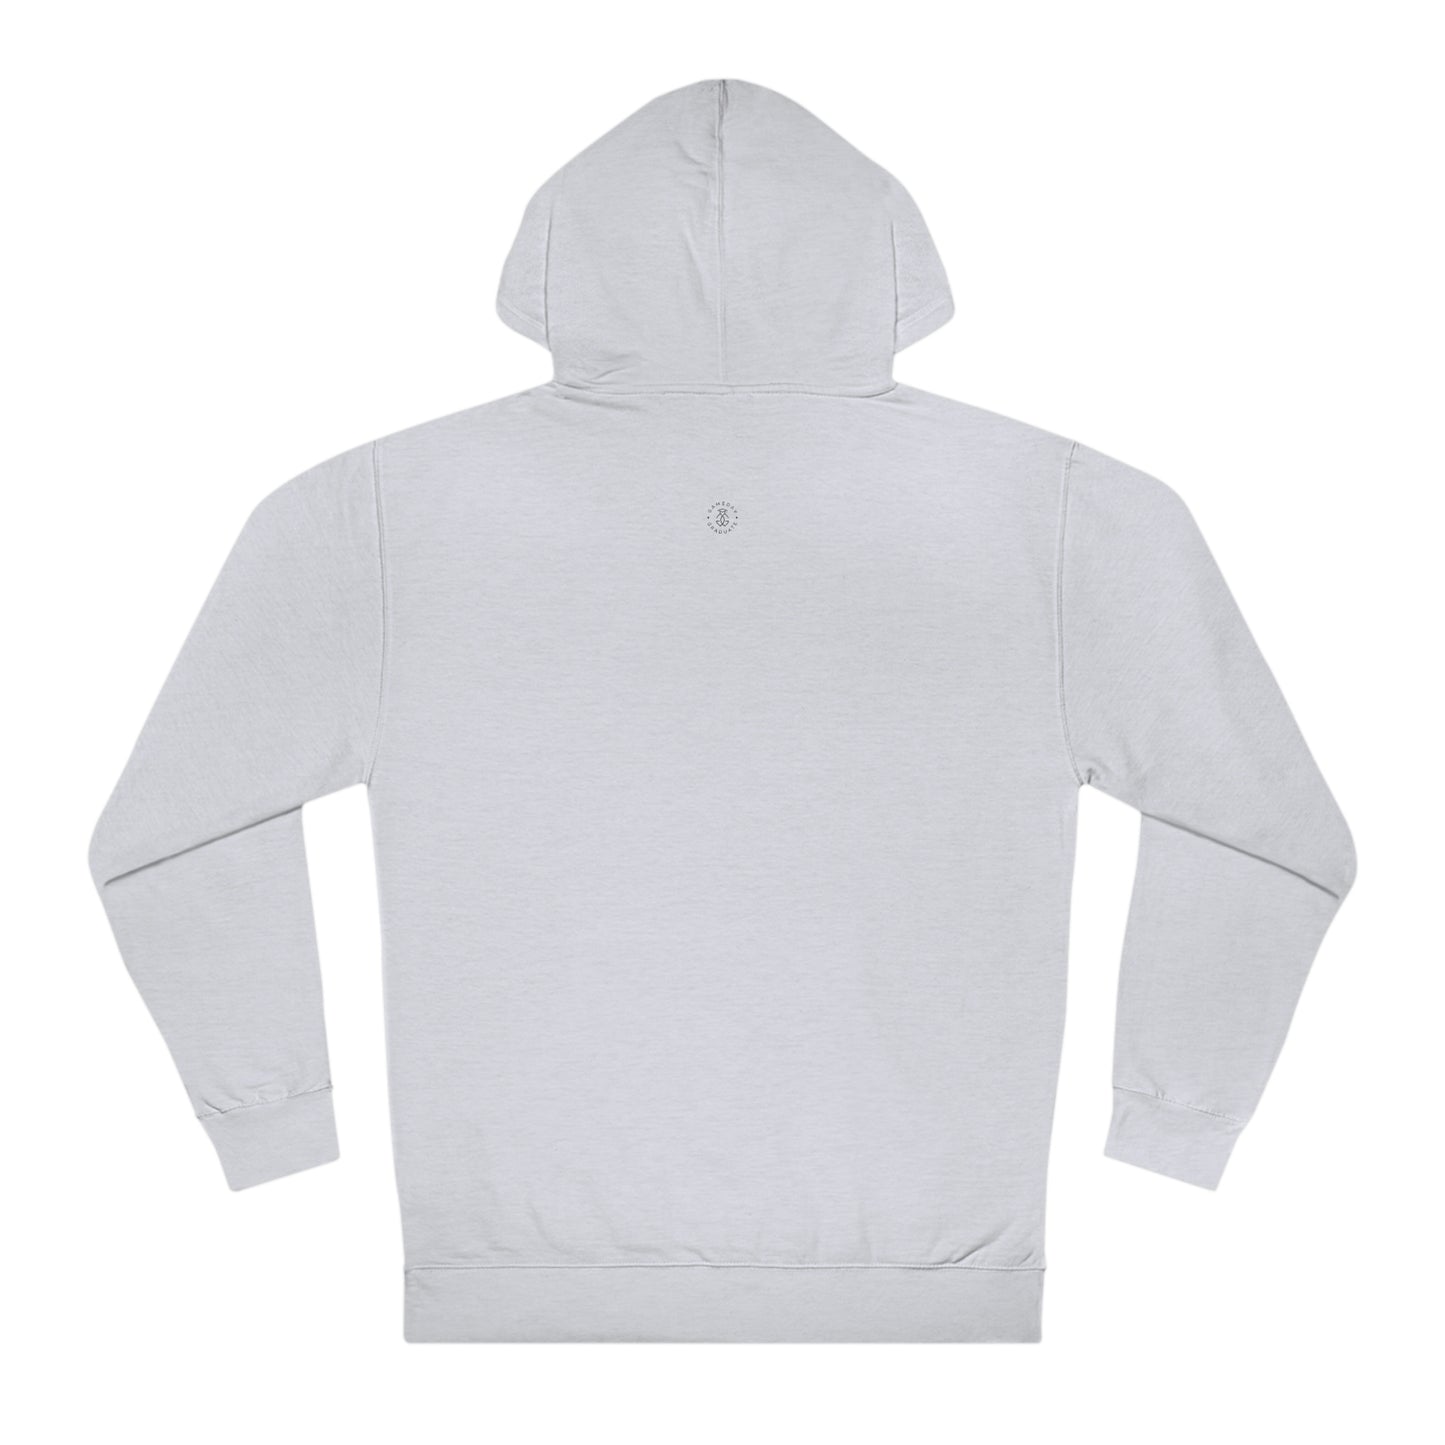 Rhodes Hooded Sweatshirt - GG - ITC